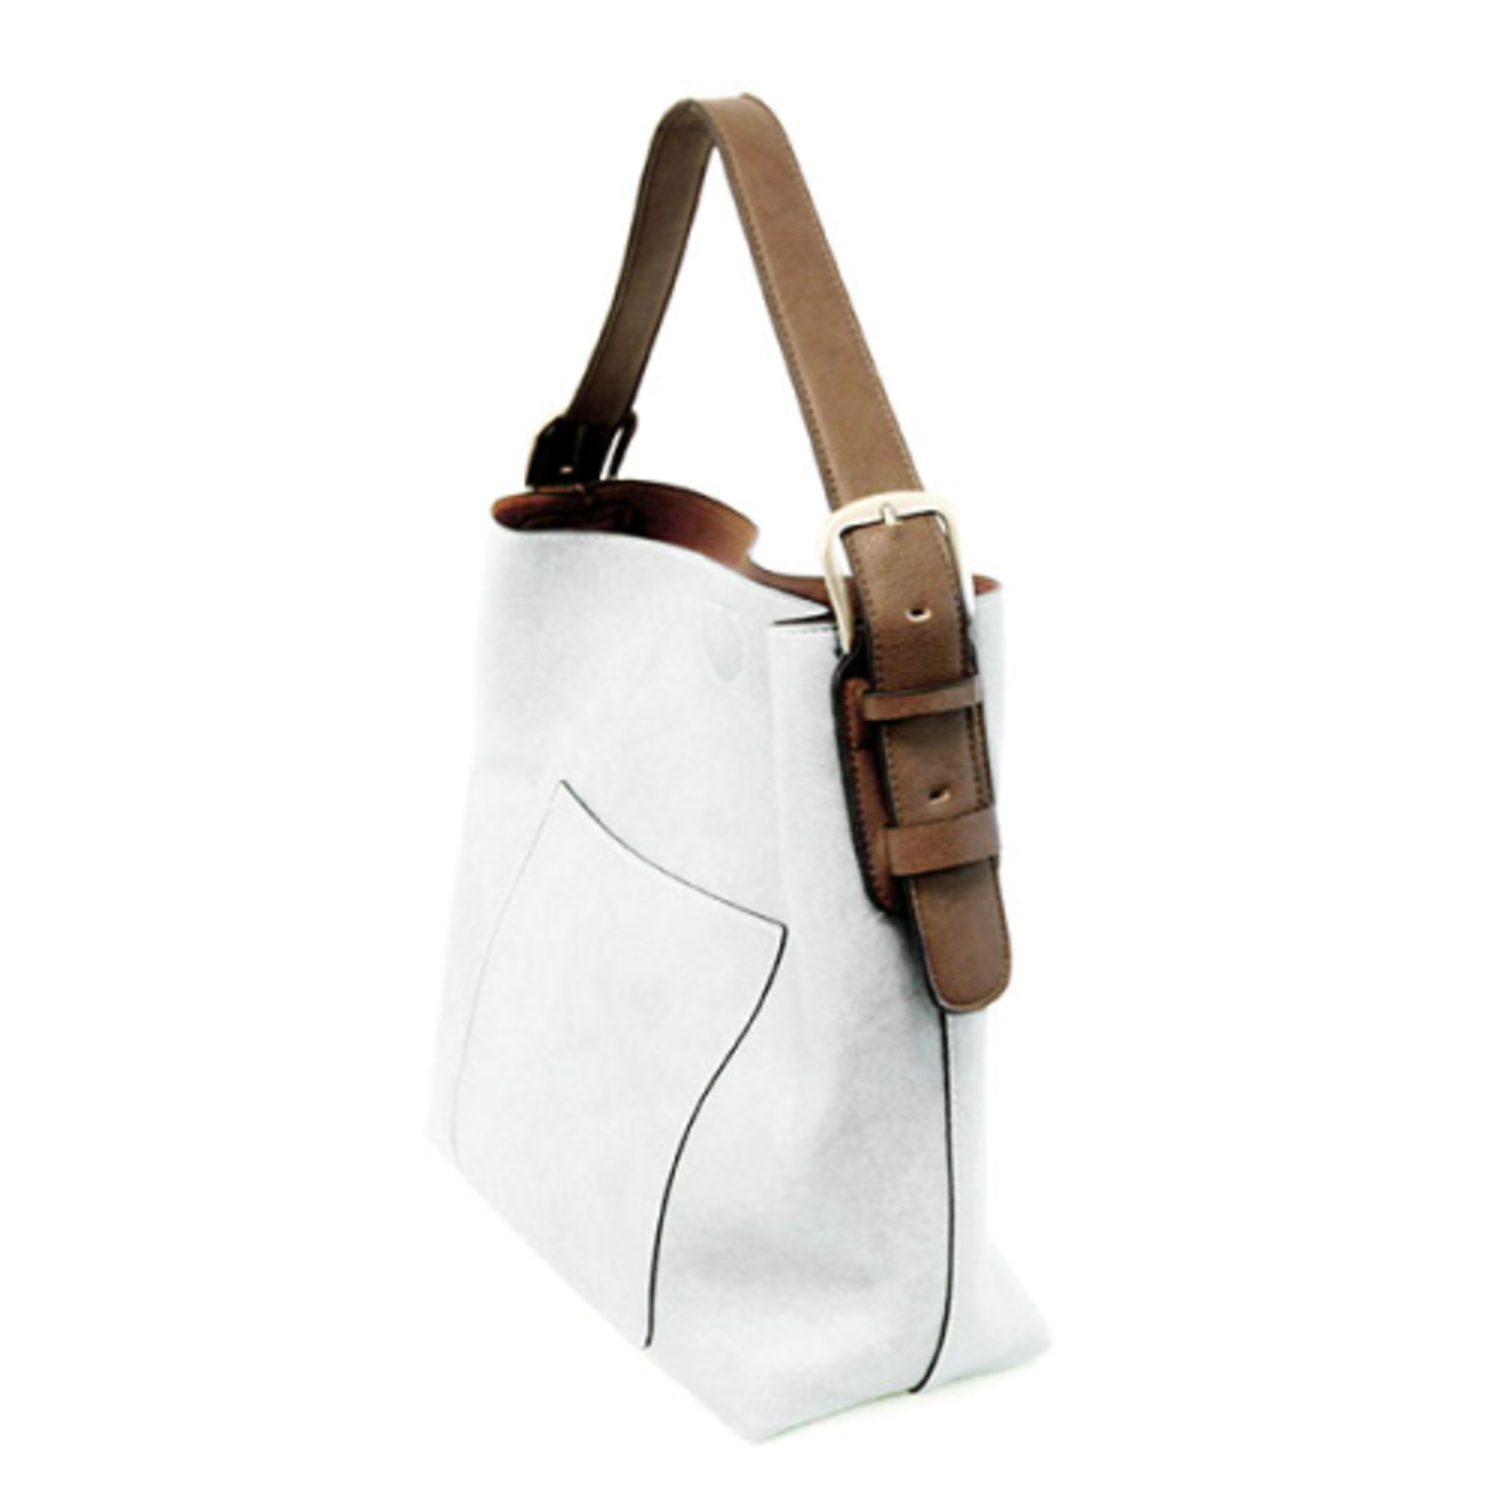 joy susan hobo handle handbag white